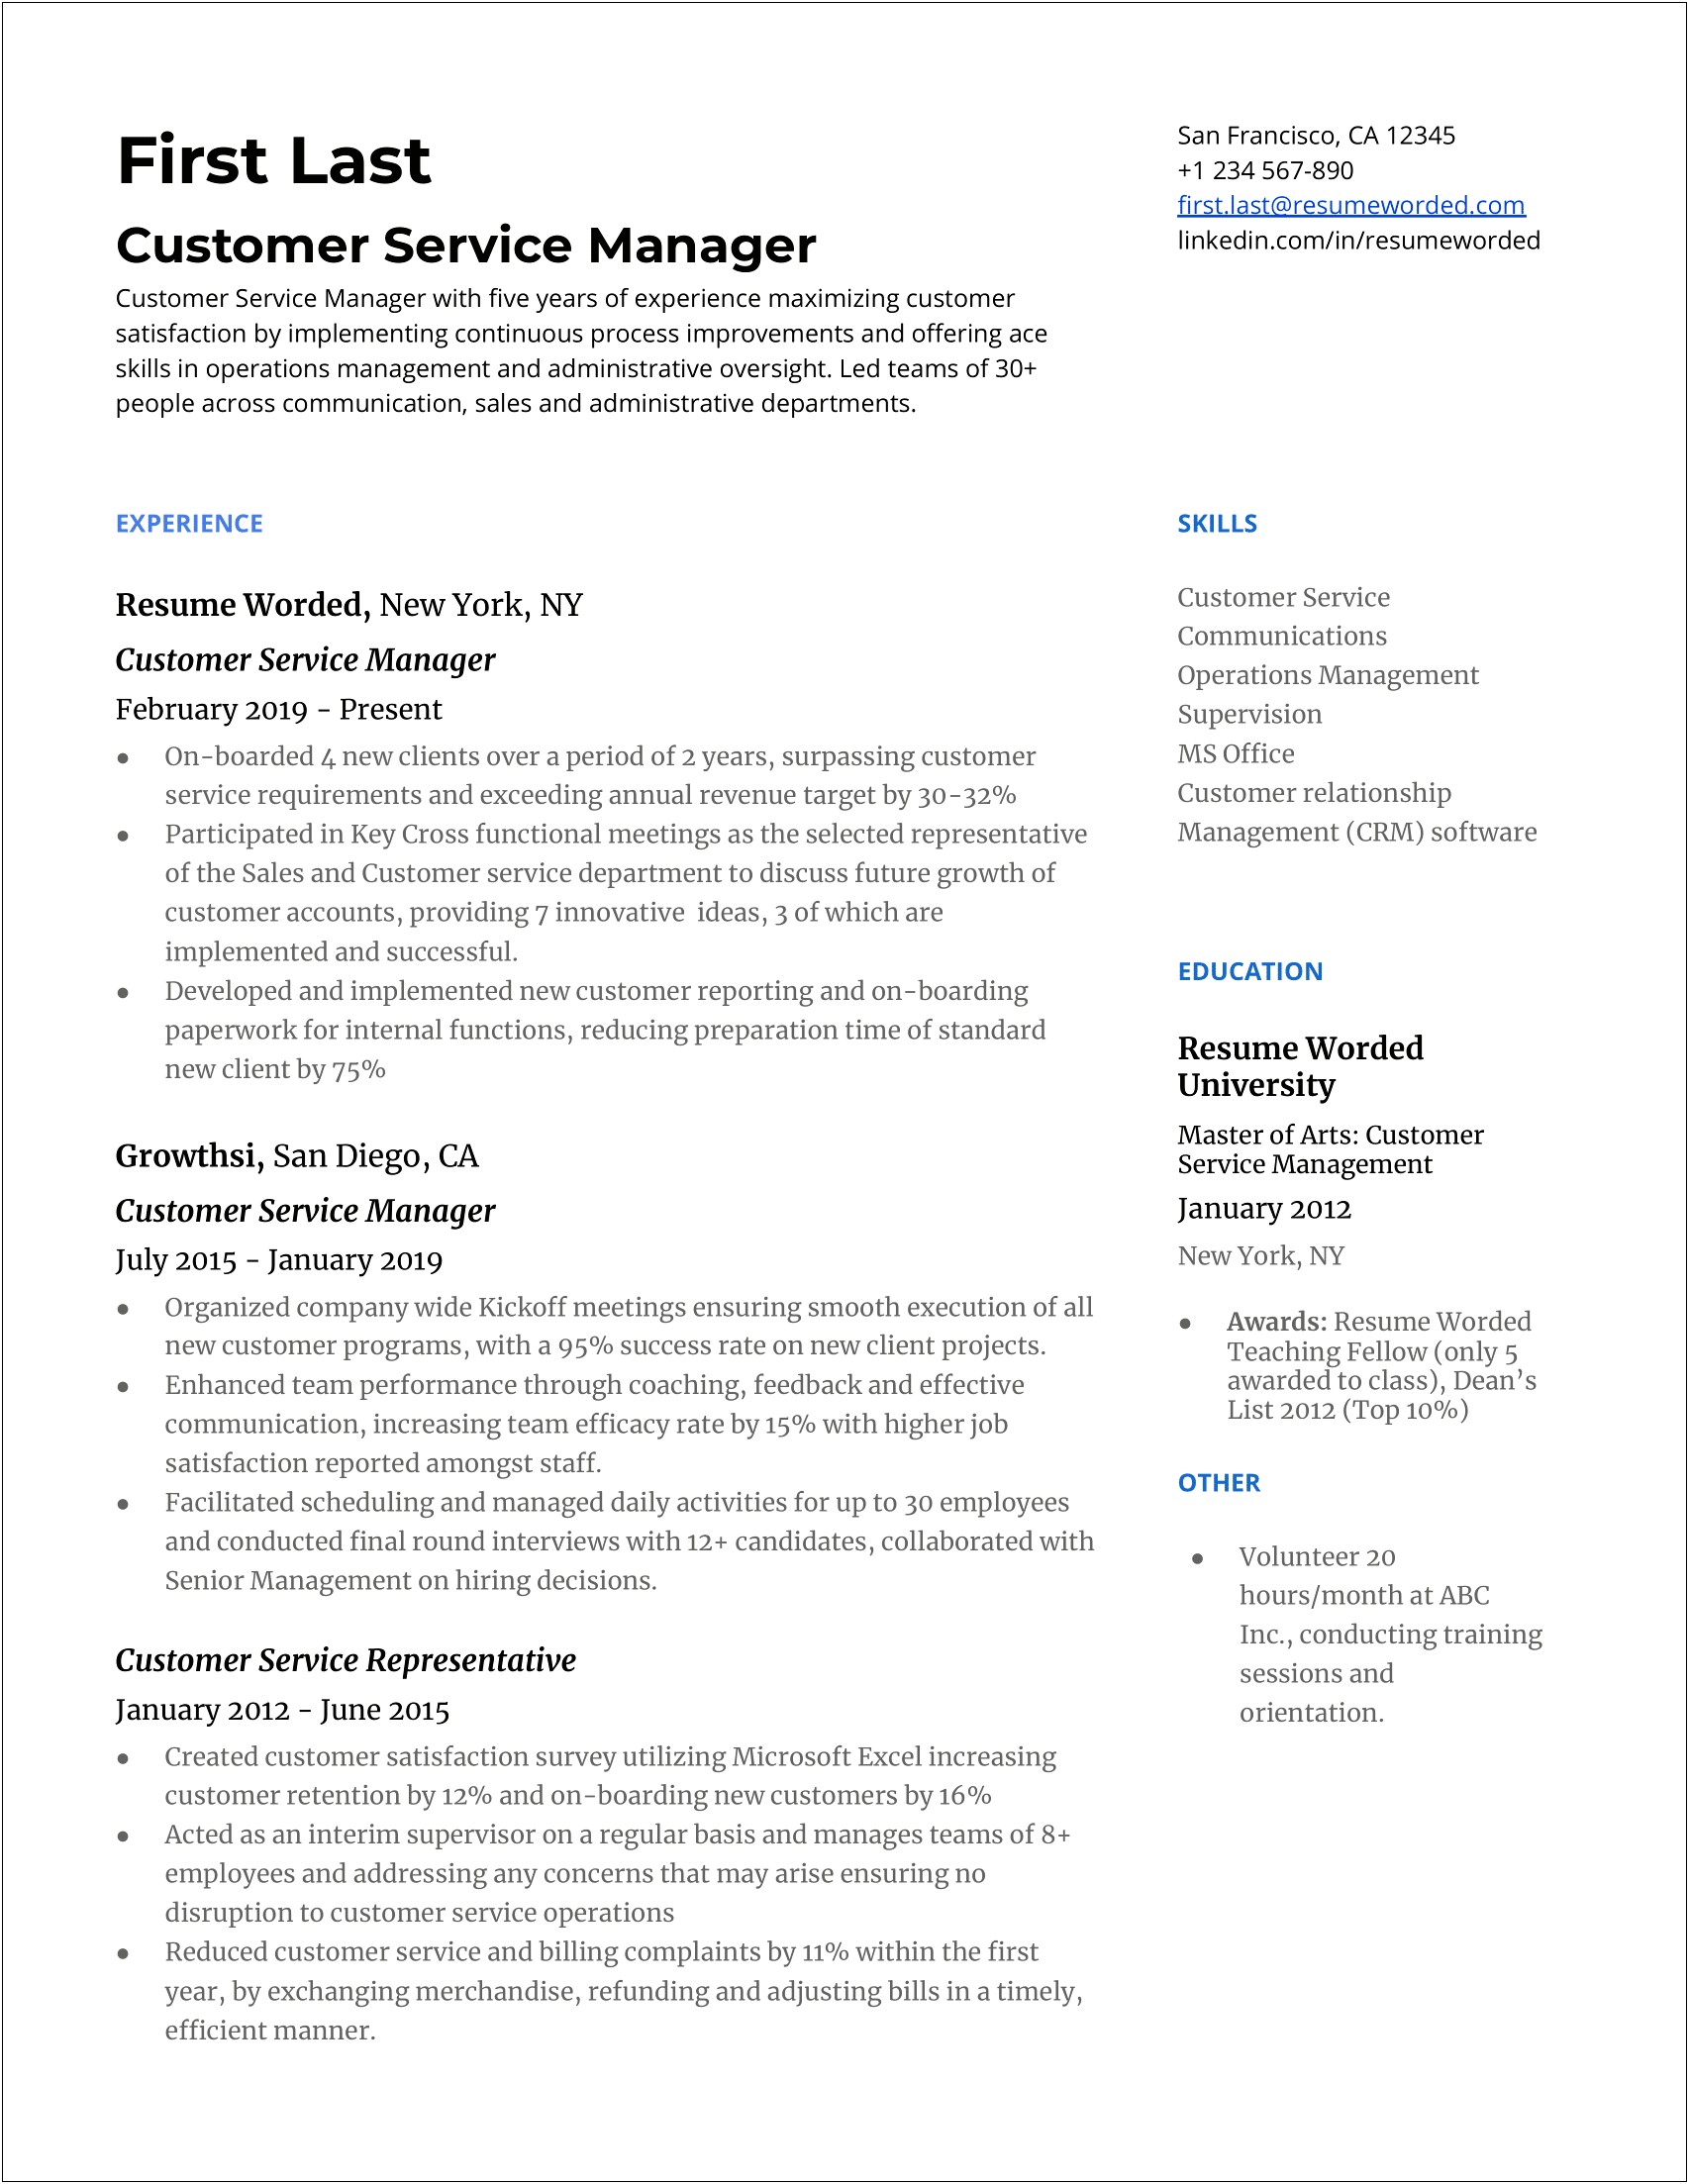 Customer Service Resume Description Of Work Example